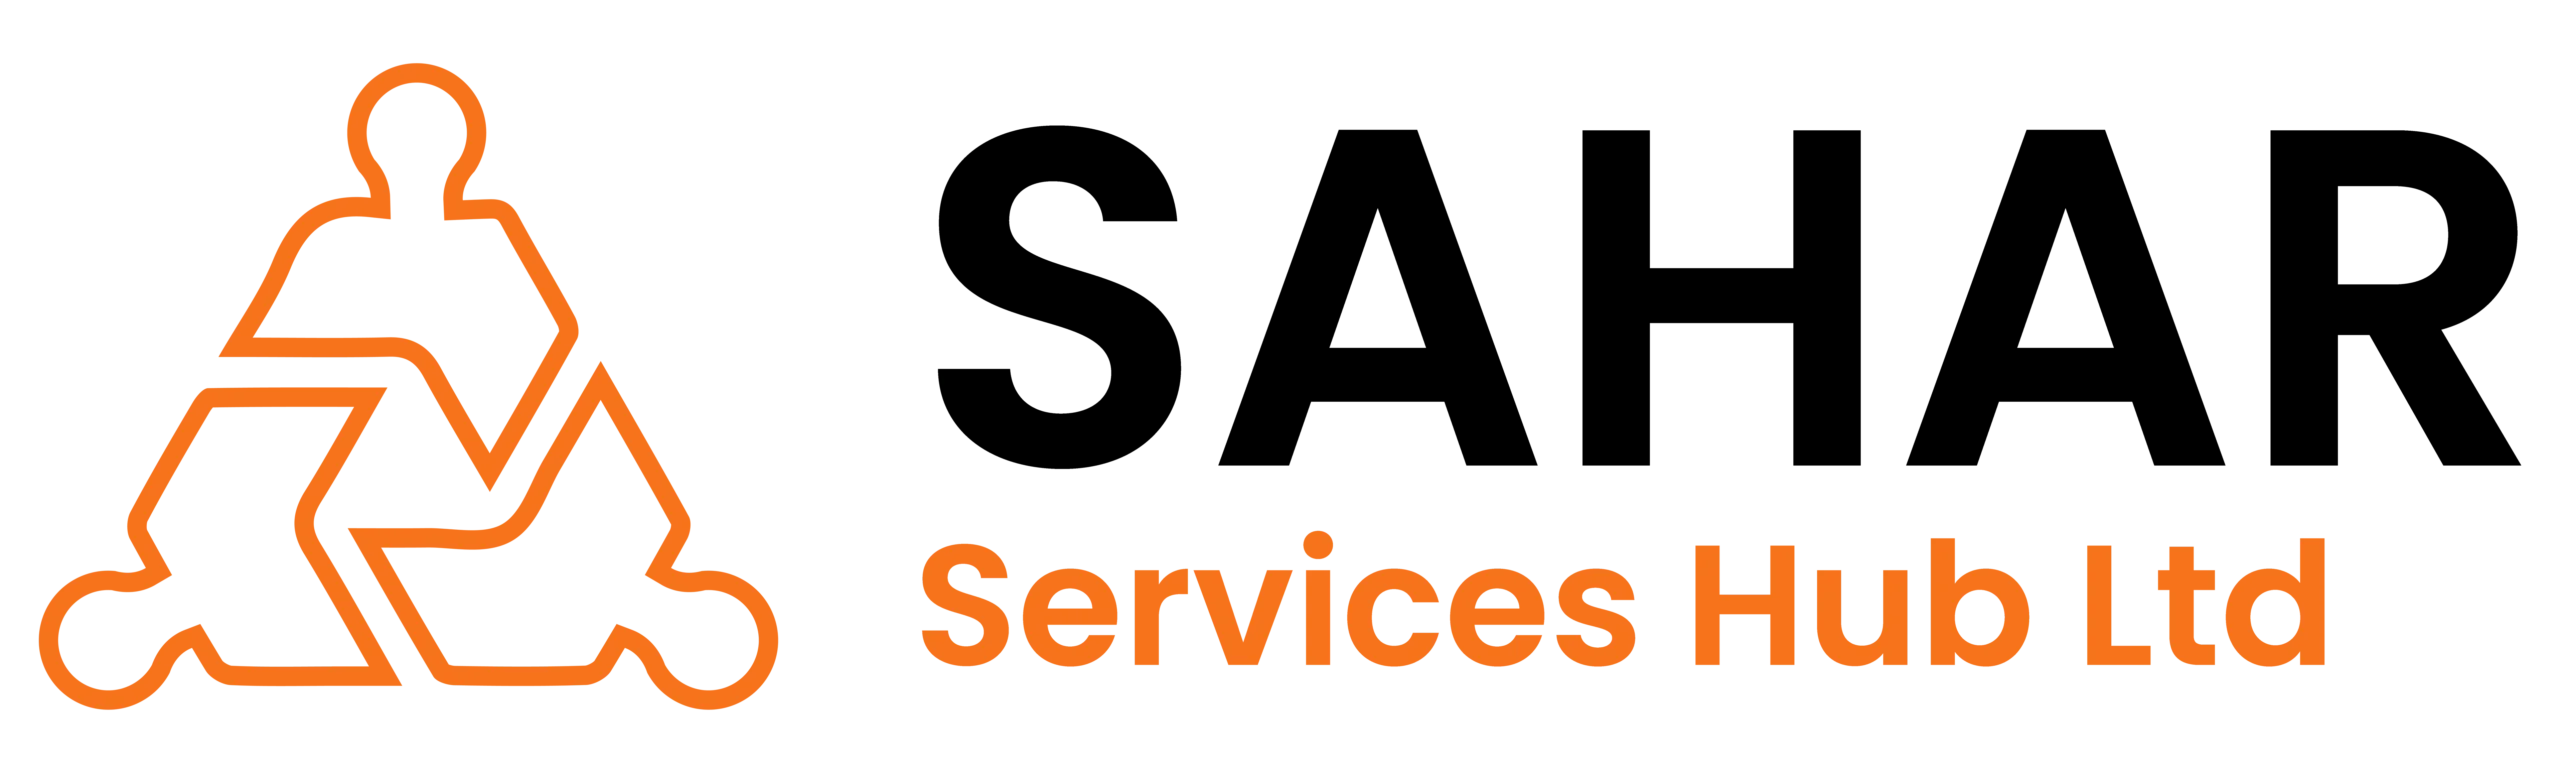 Sahar Services Hub Ltd